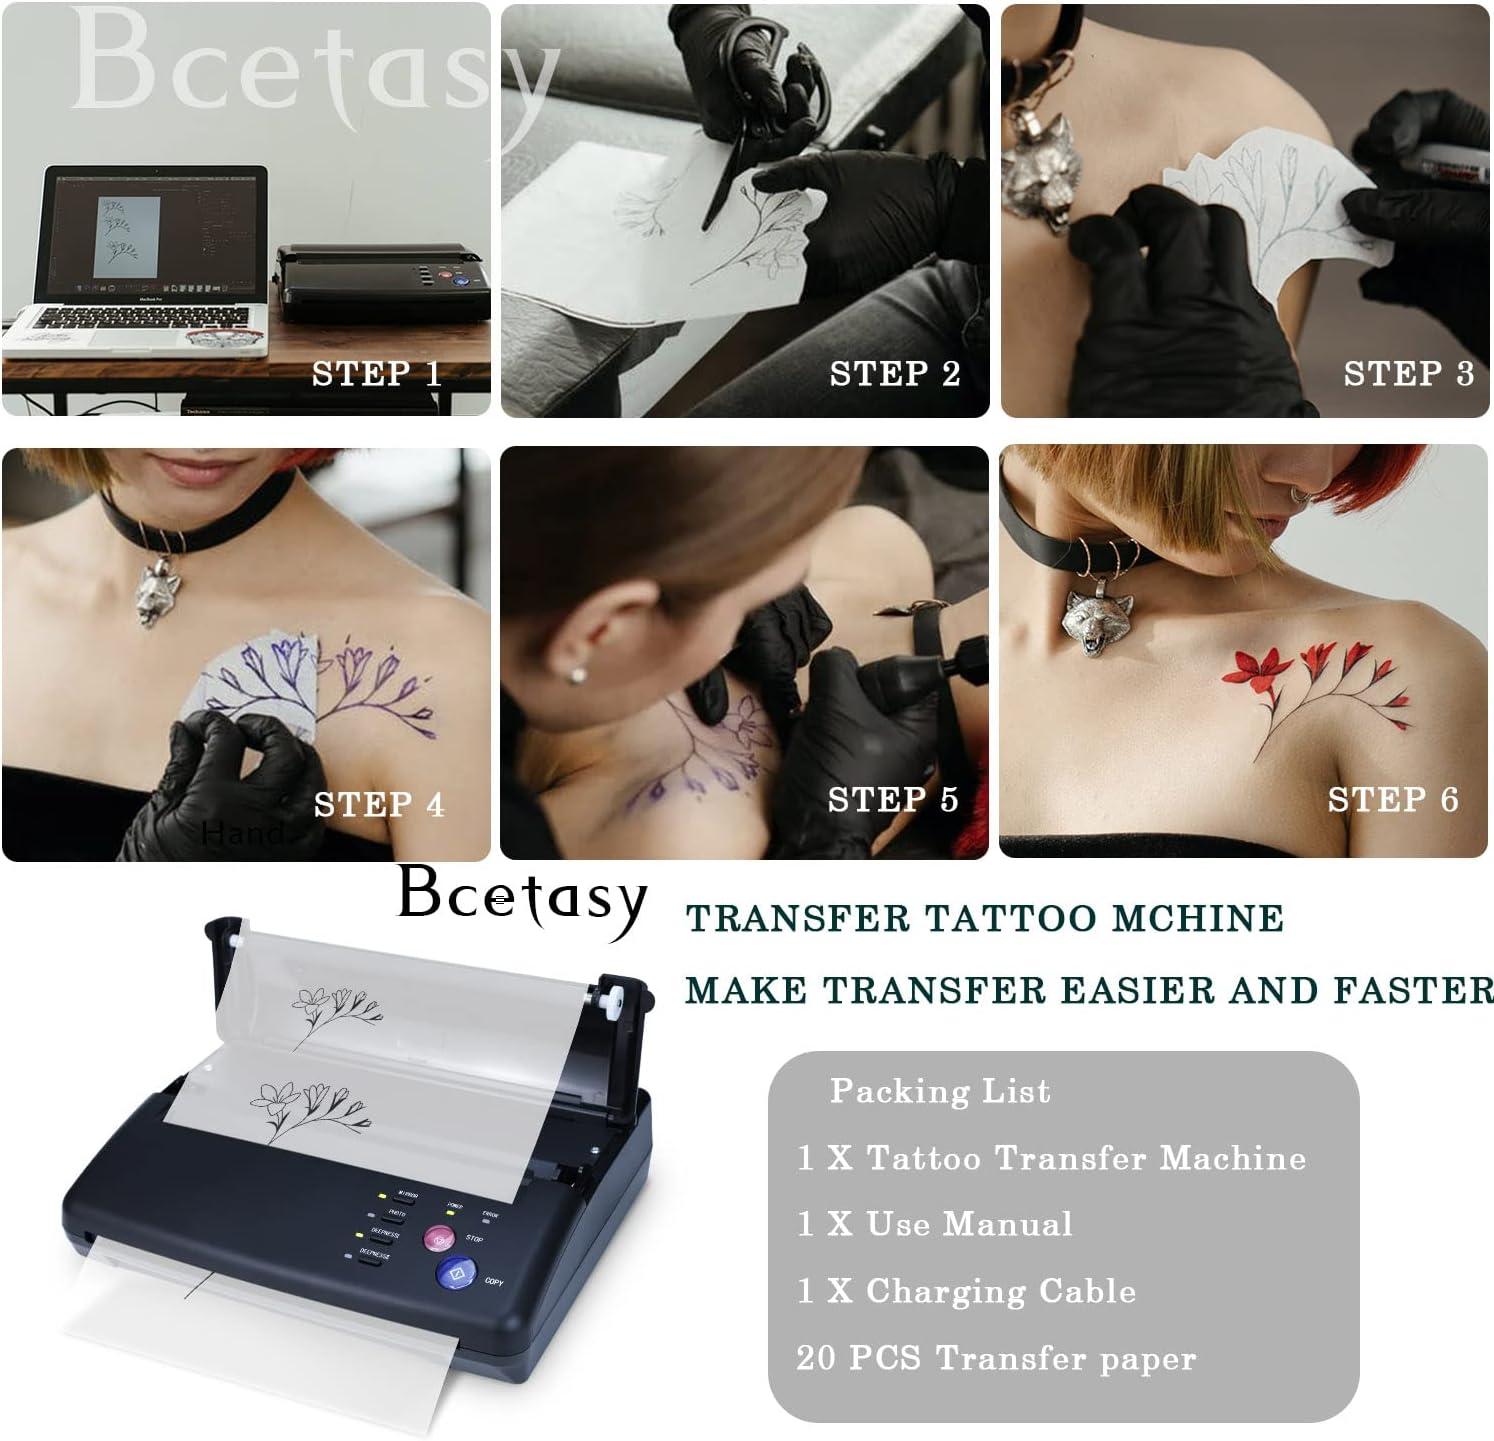  ATOMUS Tattoo Transfer Machine with 20pcs Tattoo Transfer Paper  Portable Tattoo Transfer Stencil Copier Printer (2022 Update Version)